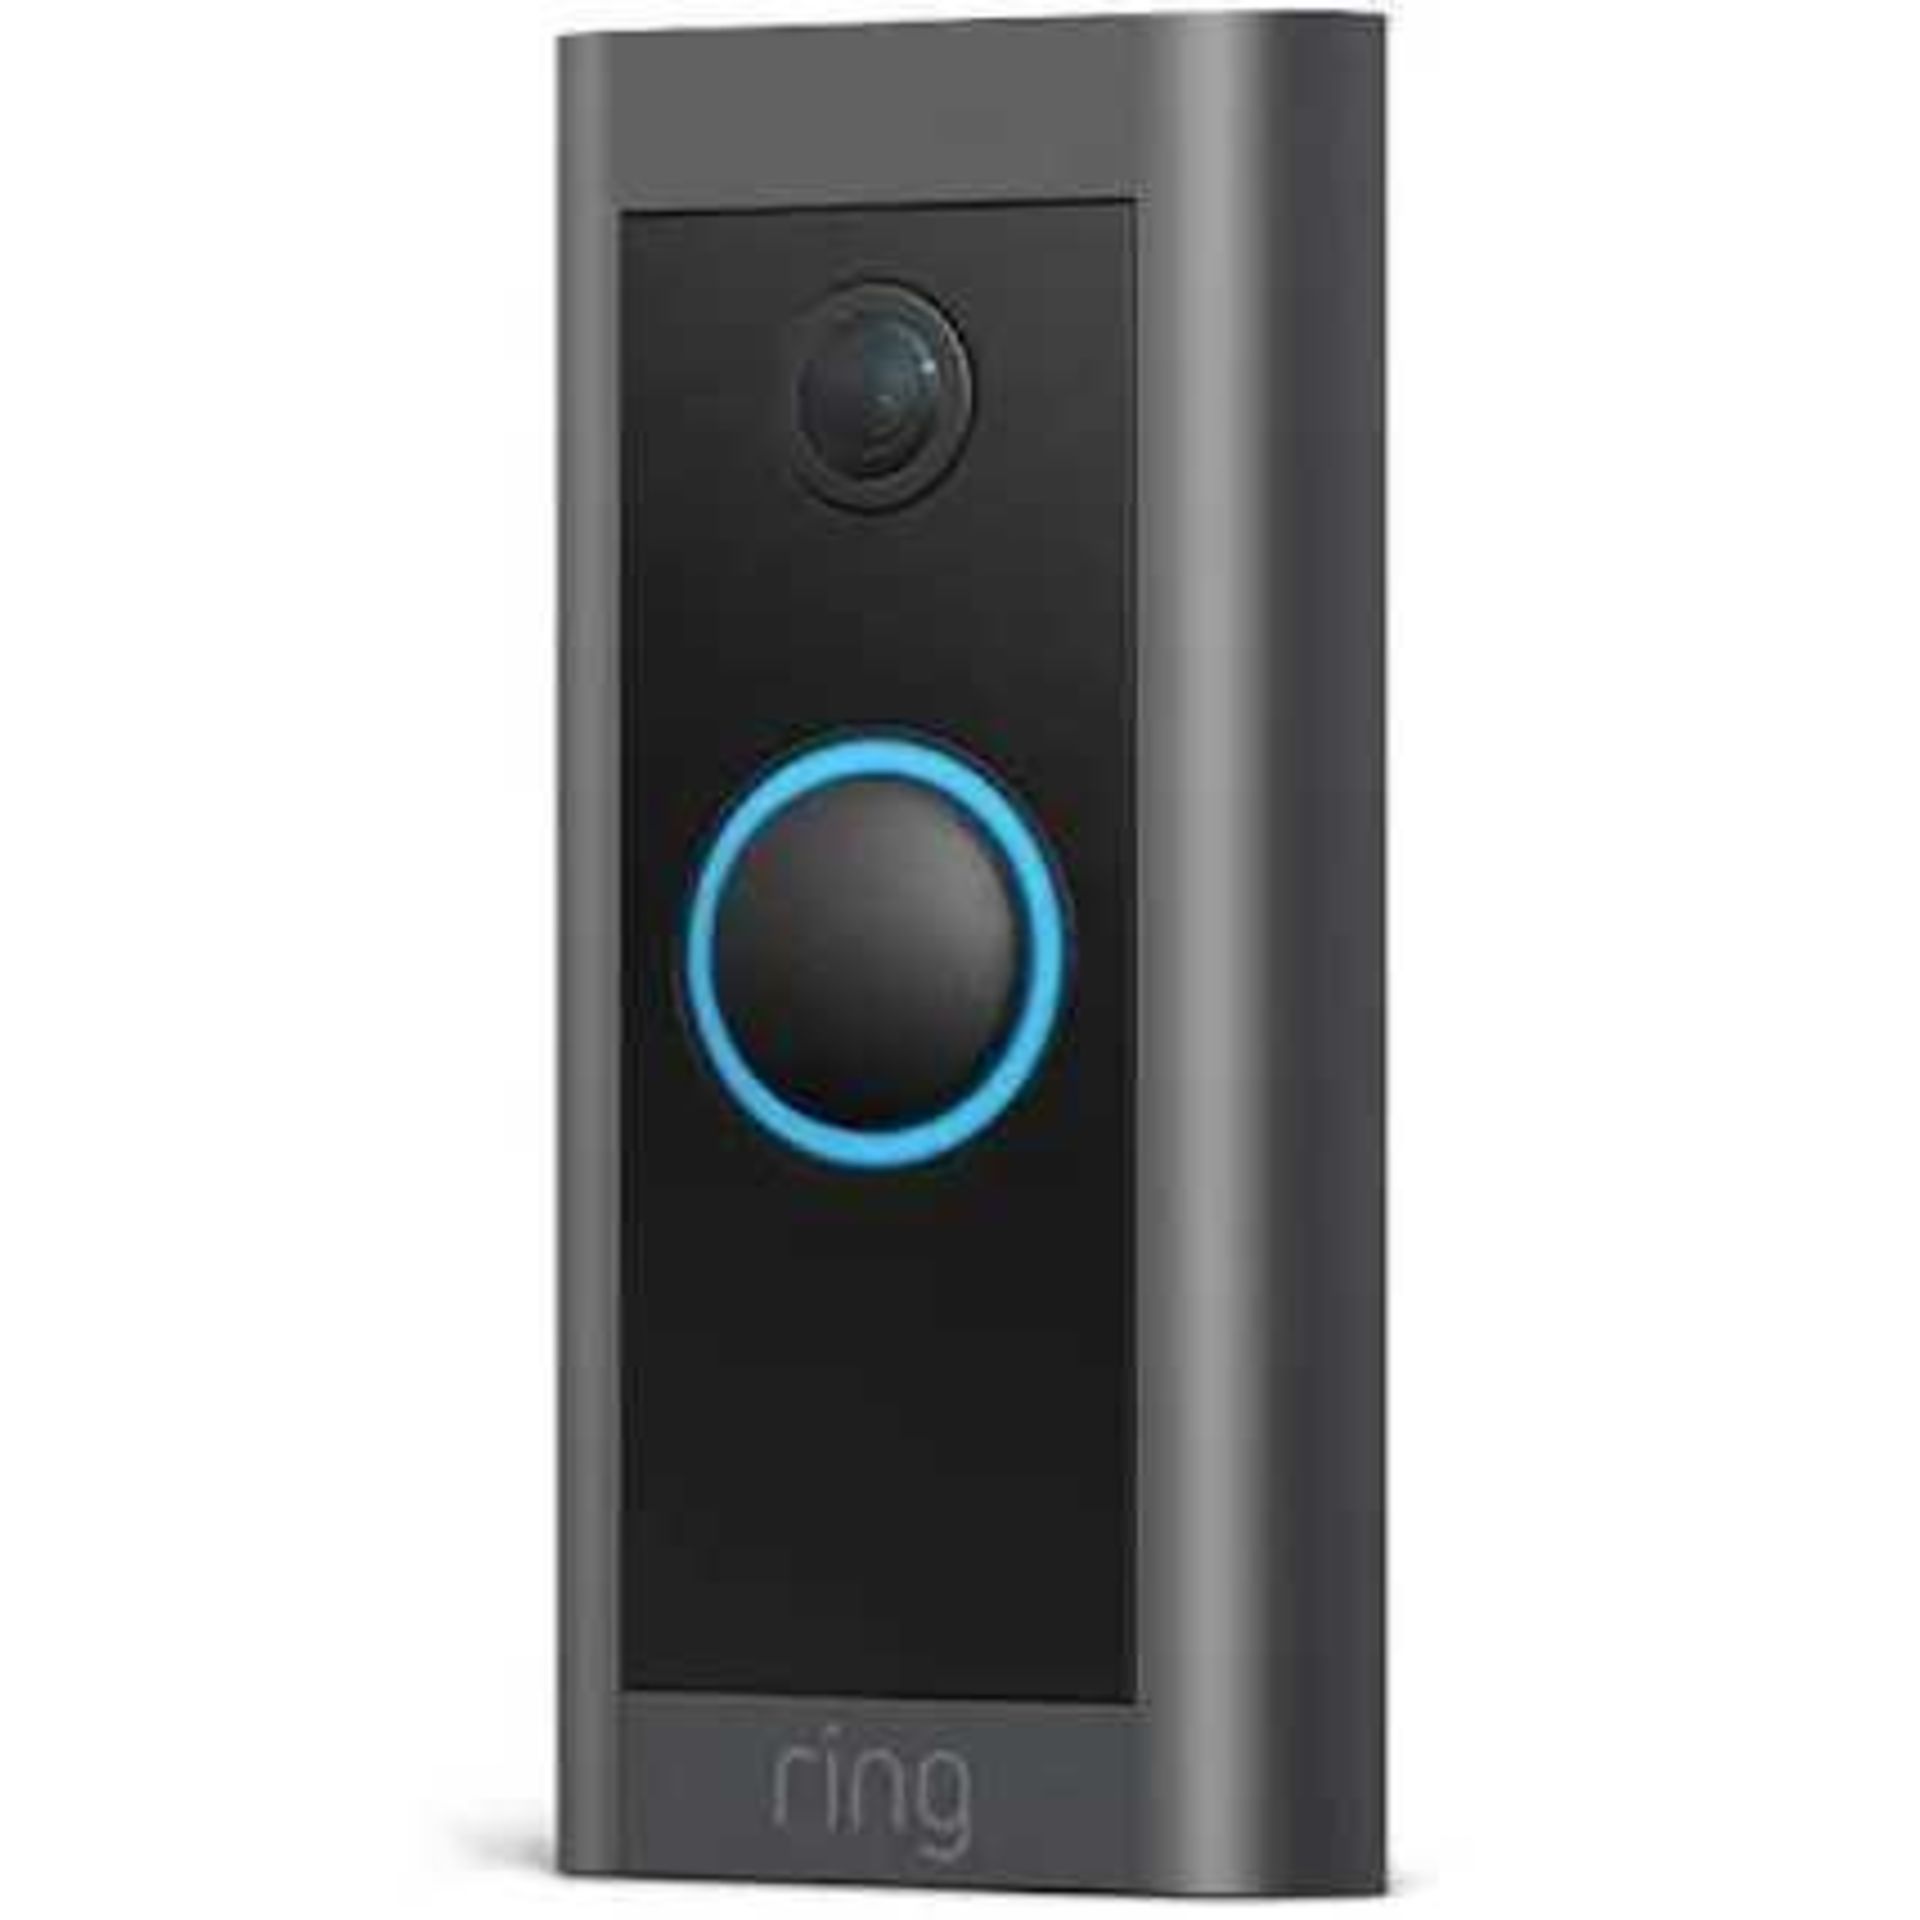 RRP £80 Boxed Ring 1080P Smart Video Doorbell